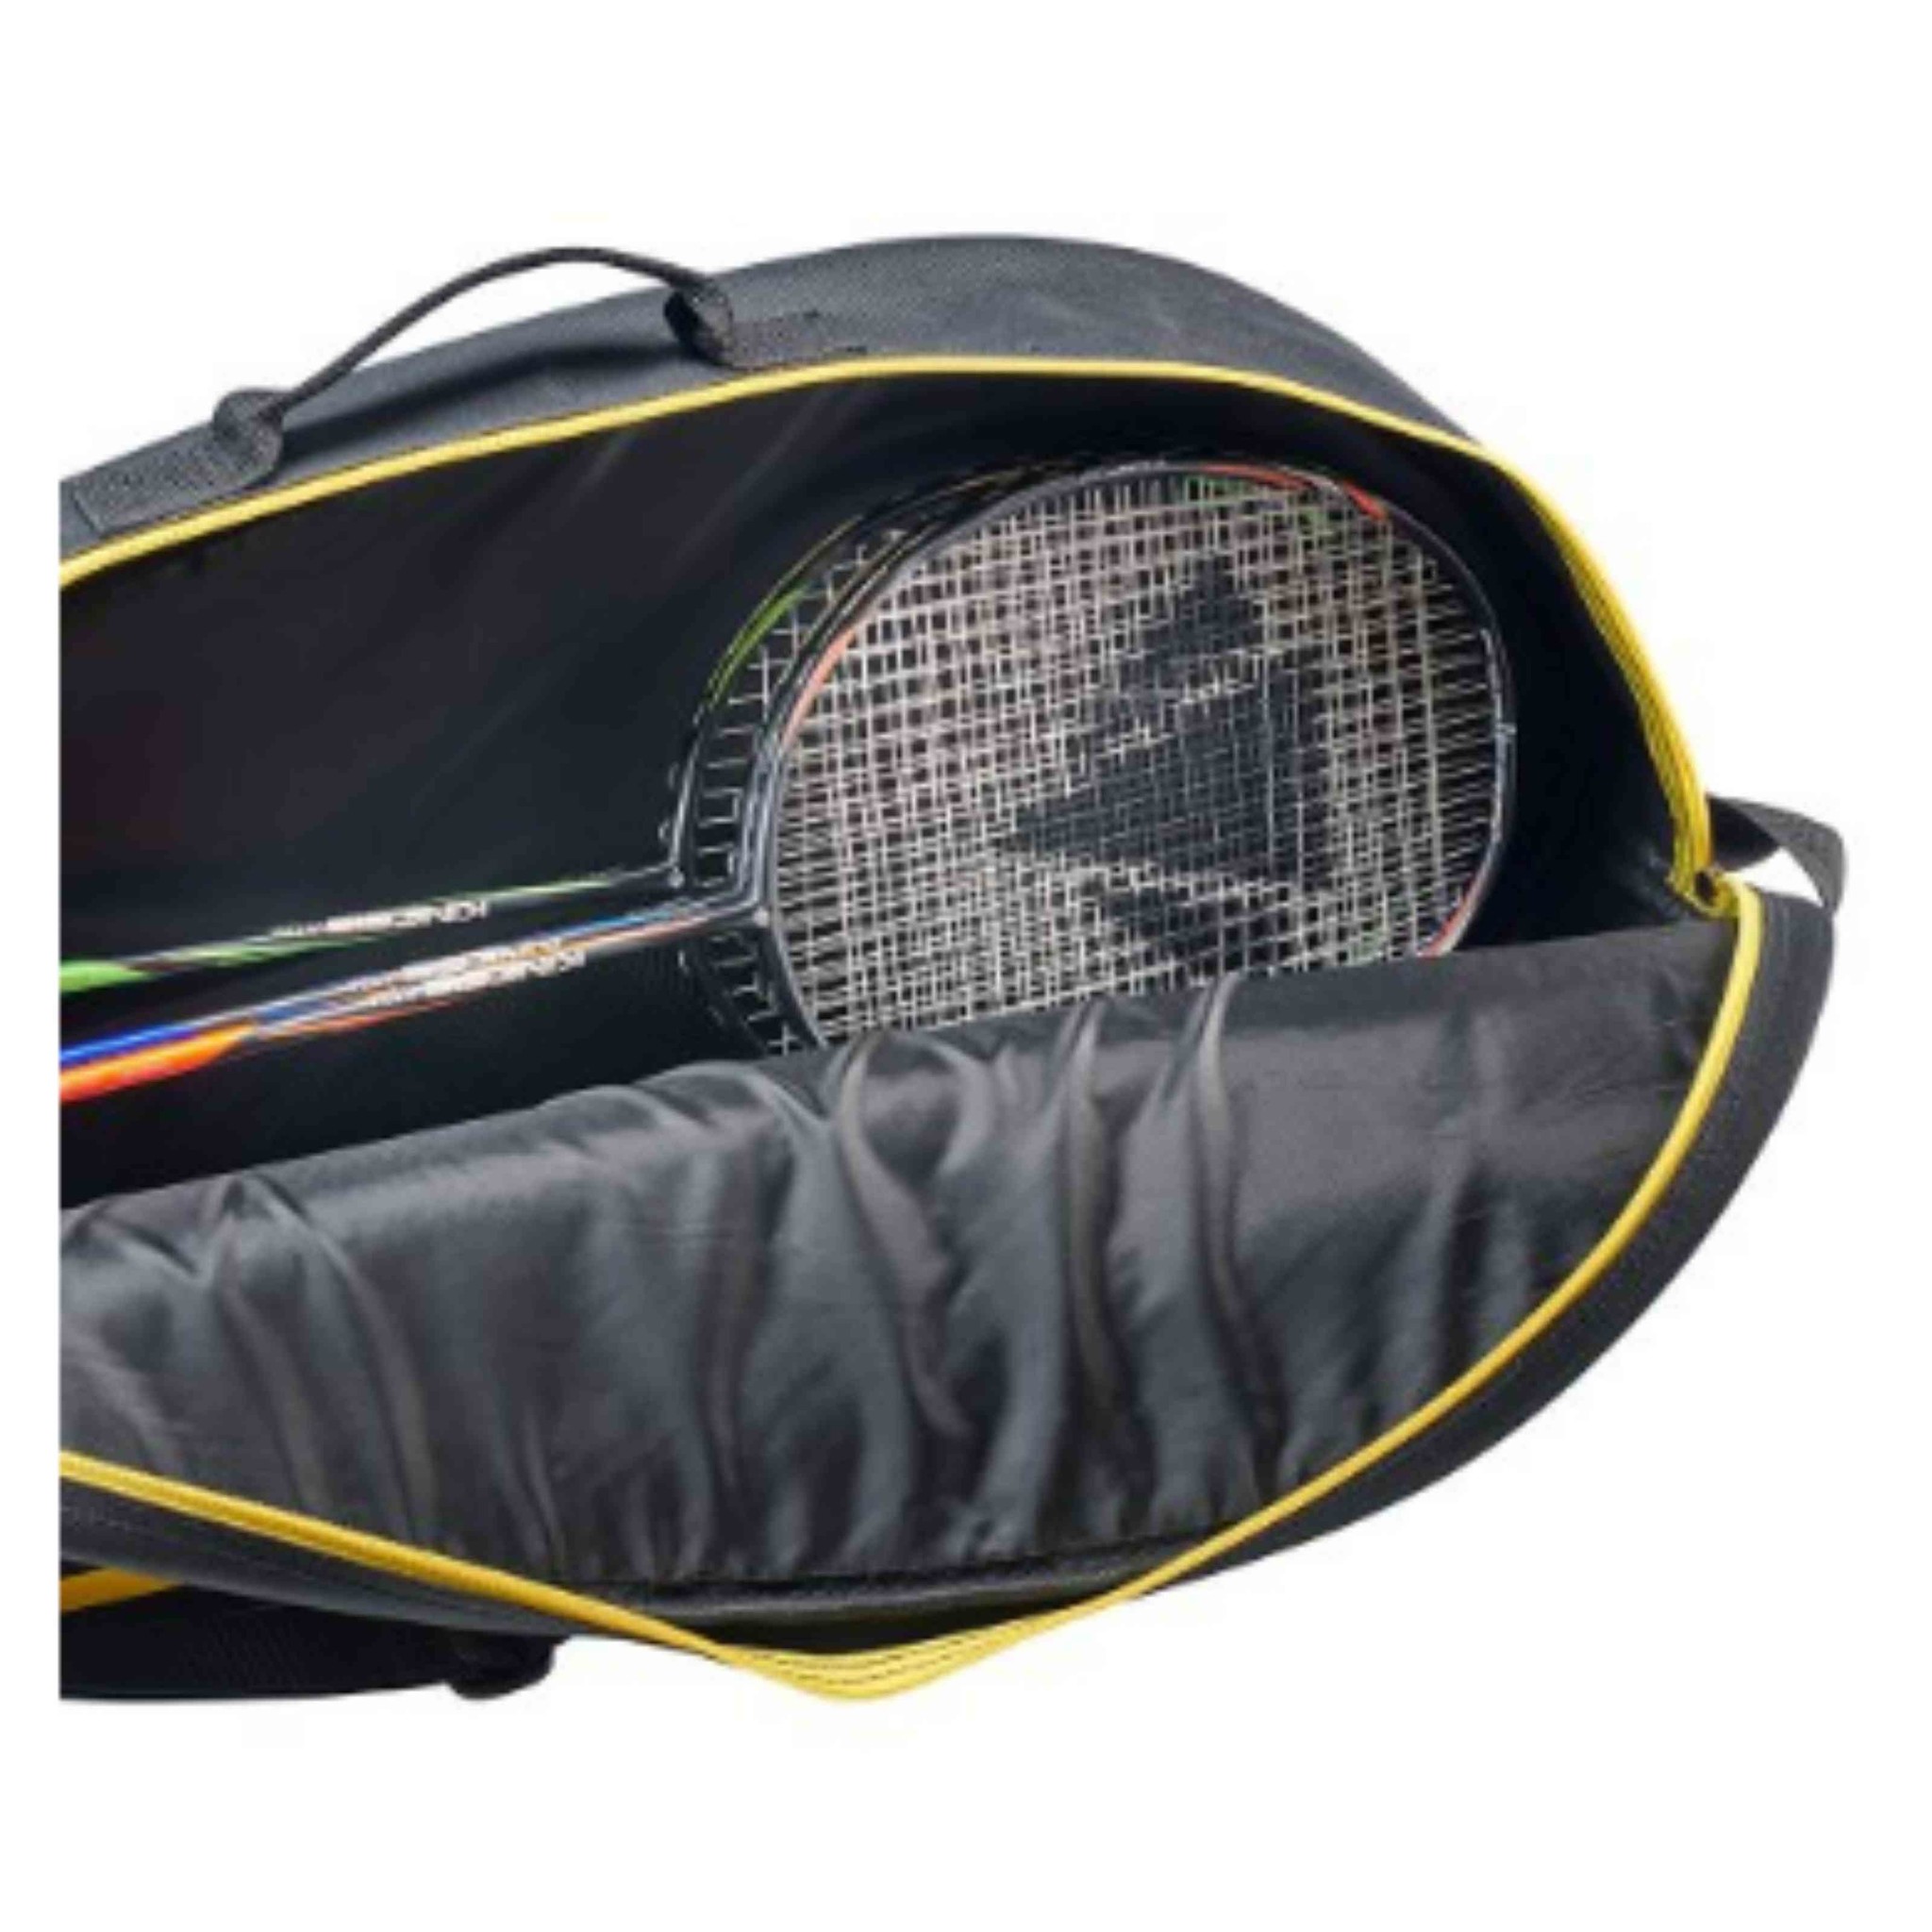 Carlton 1 comp Racketbag 2101 Black/Grey kopen? - KW FLEX racket speciaalzaak